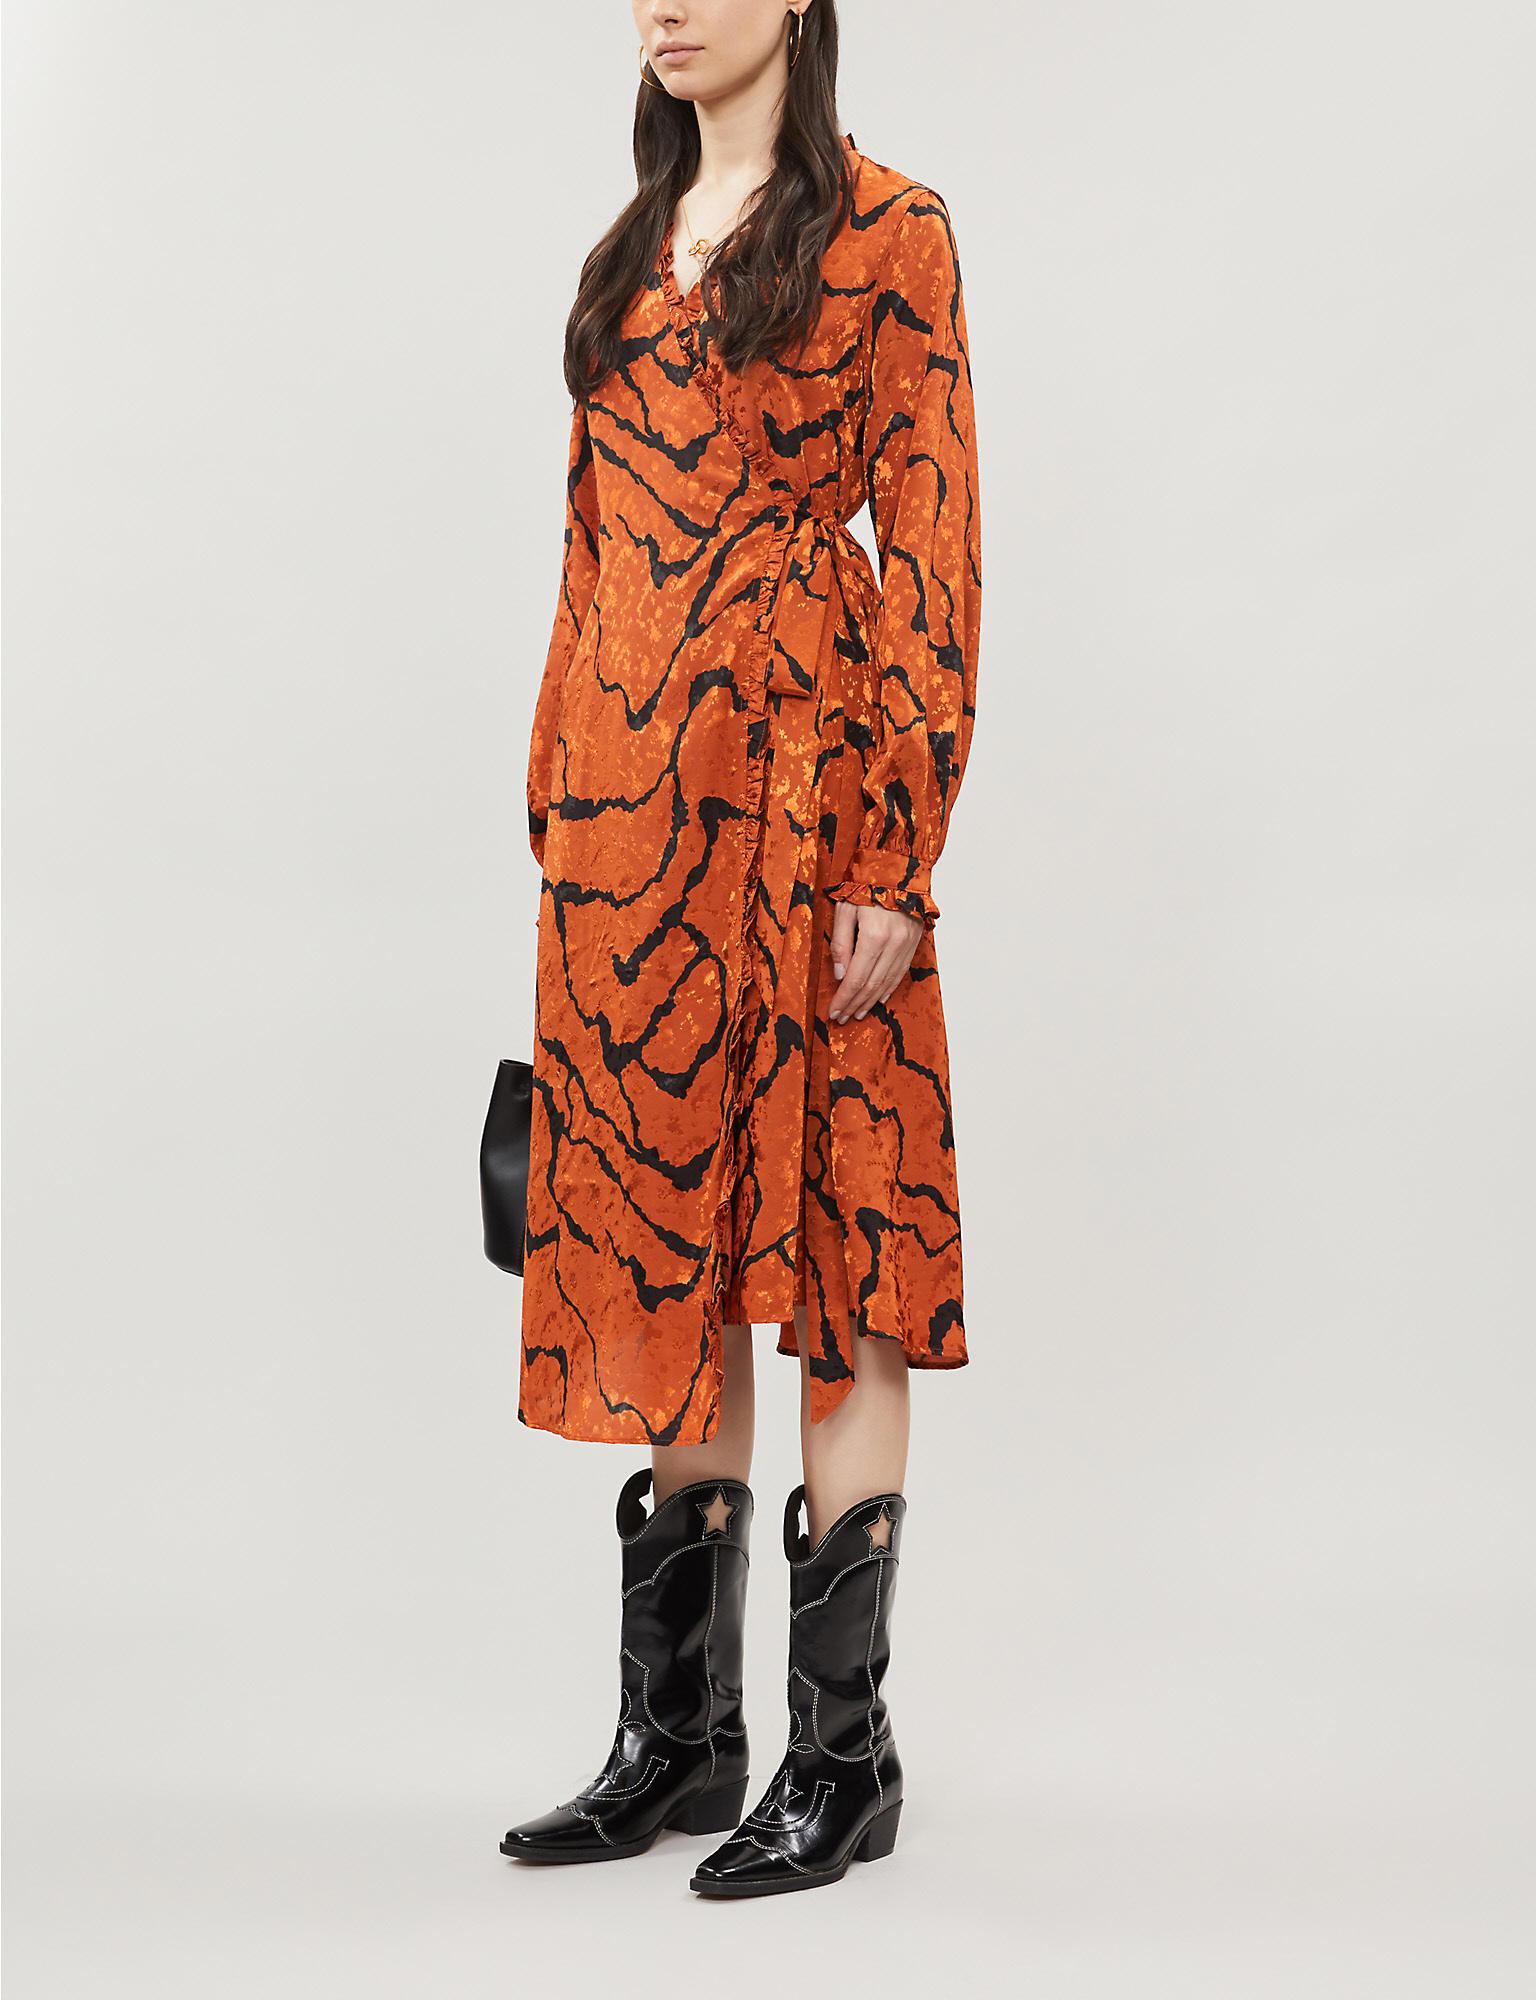 Gestuz Aylin Ripple-print Satin Midi Dress in Orange - Lyst